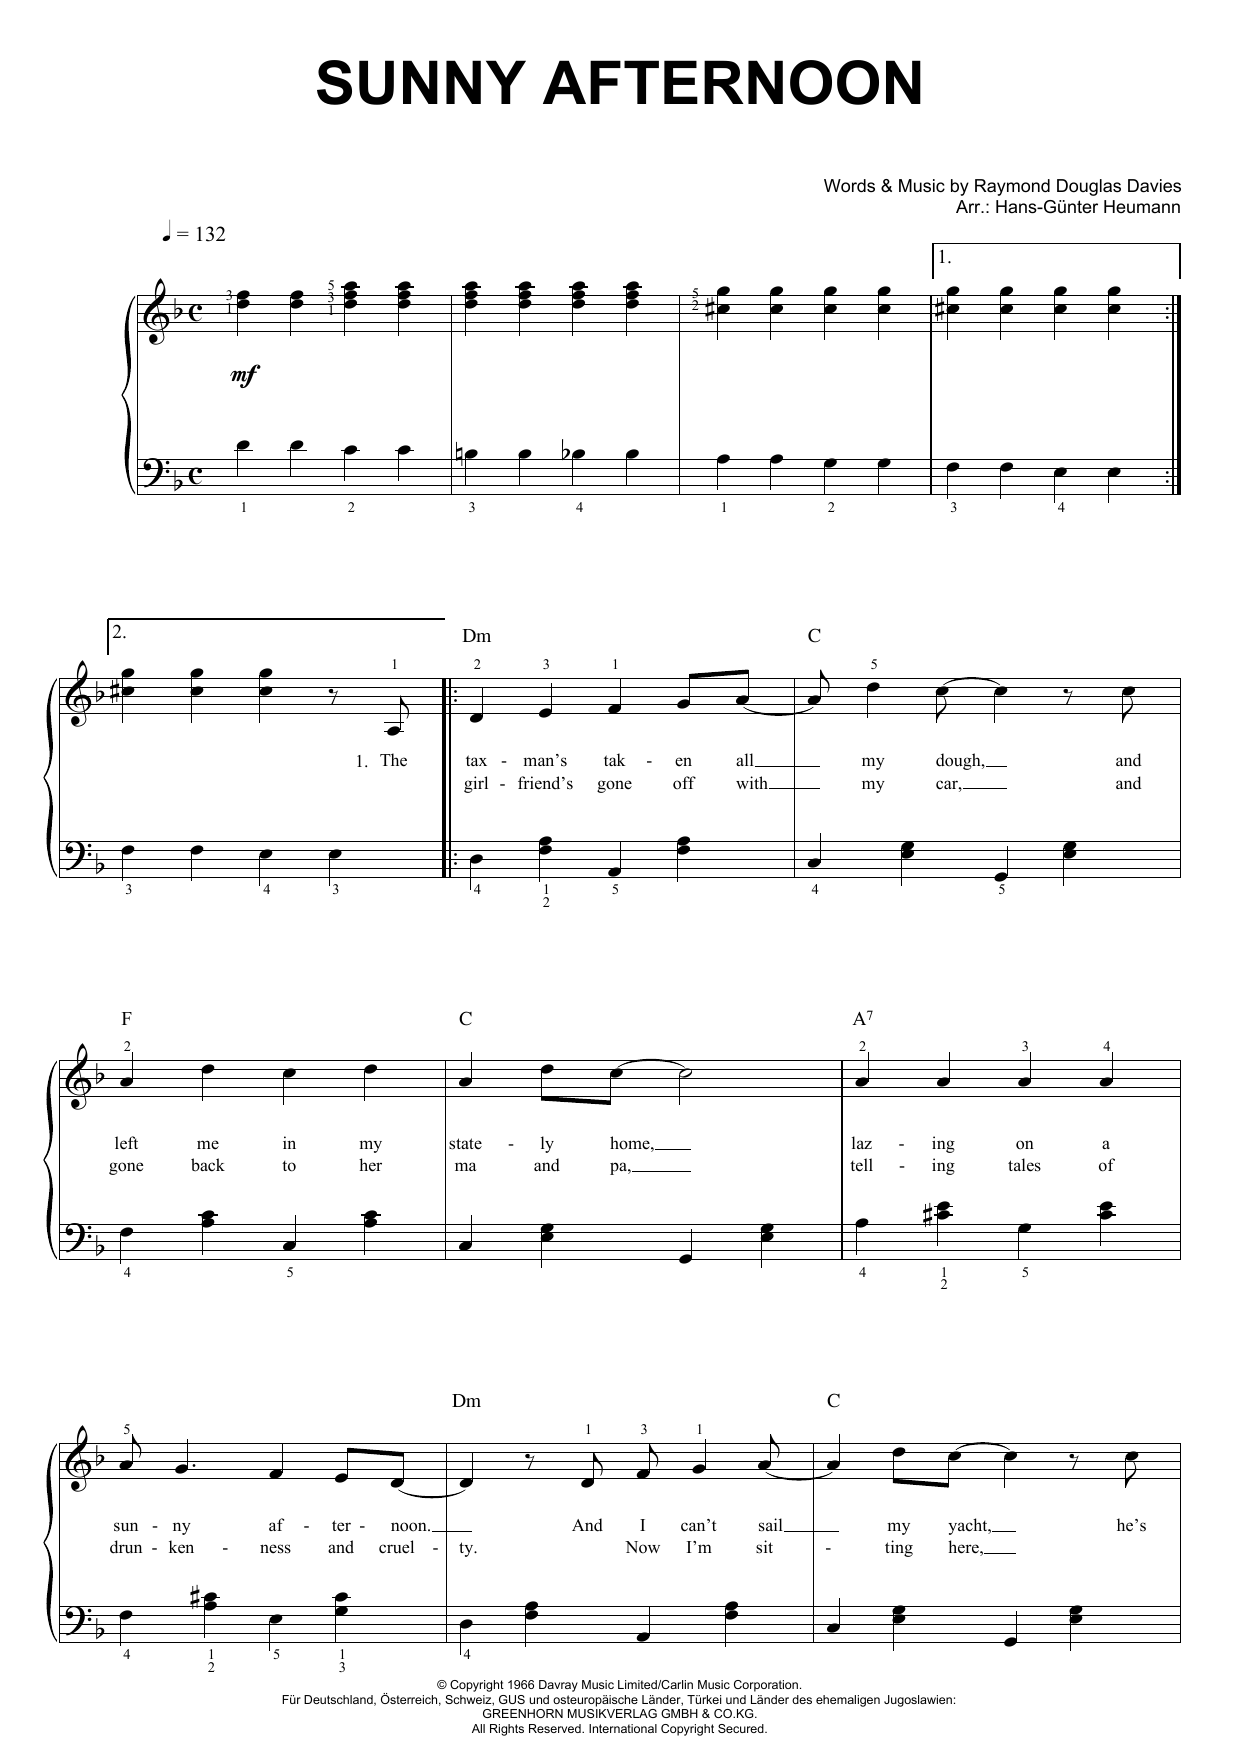 The Kinks Sunny Afternoon Sheet Music Notes & Chords for Beginner Ukulele - Download or Print PDF